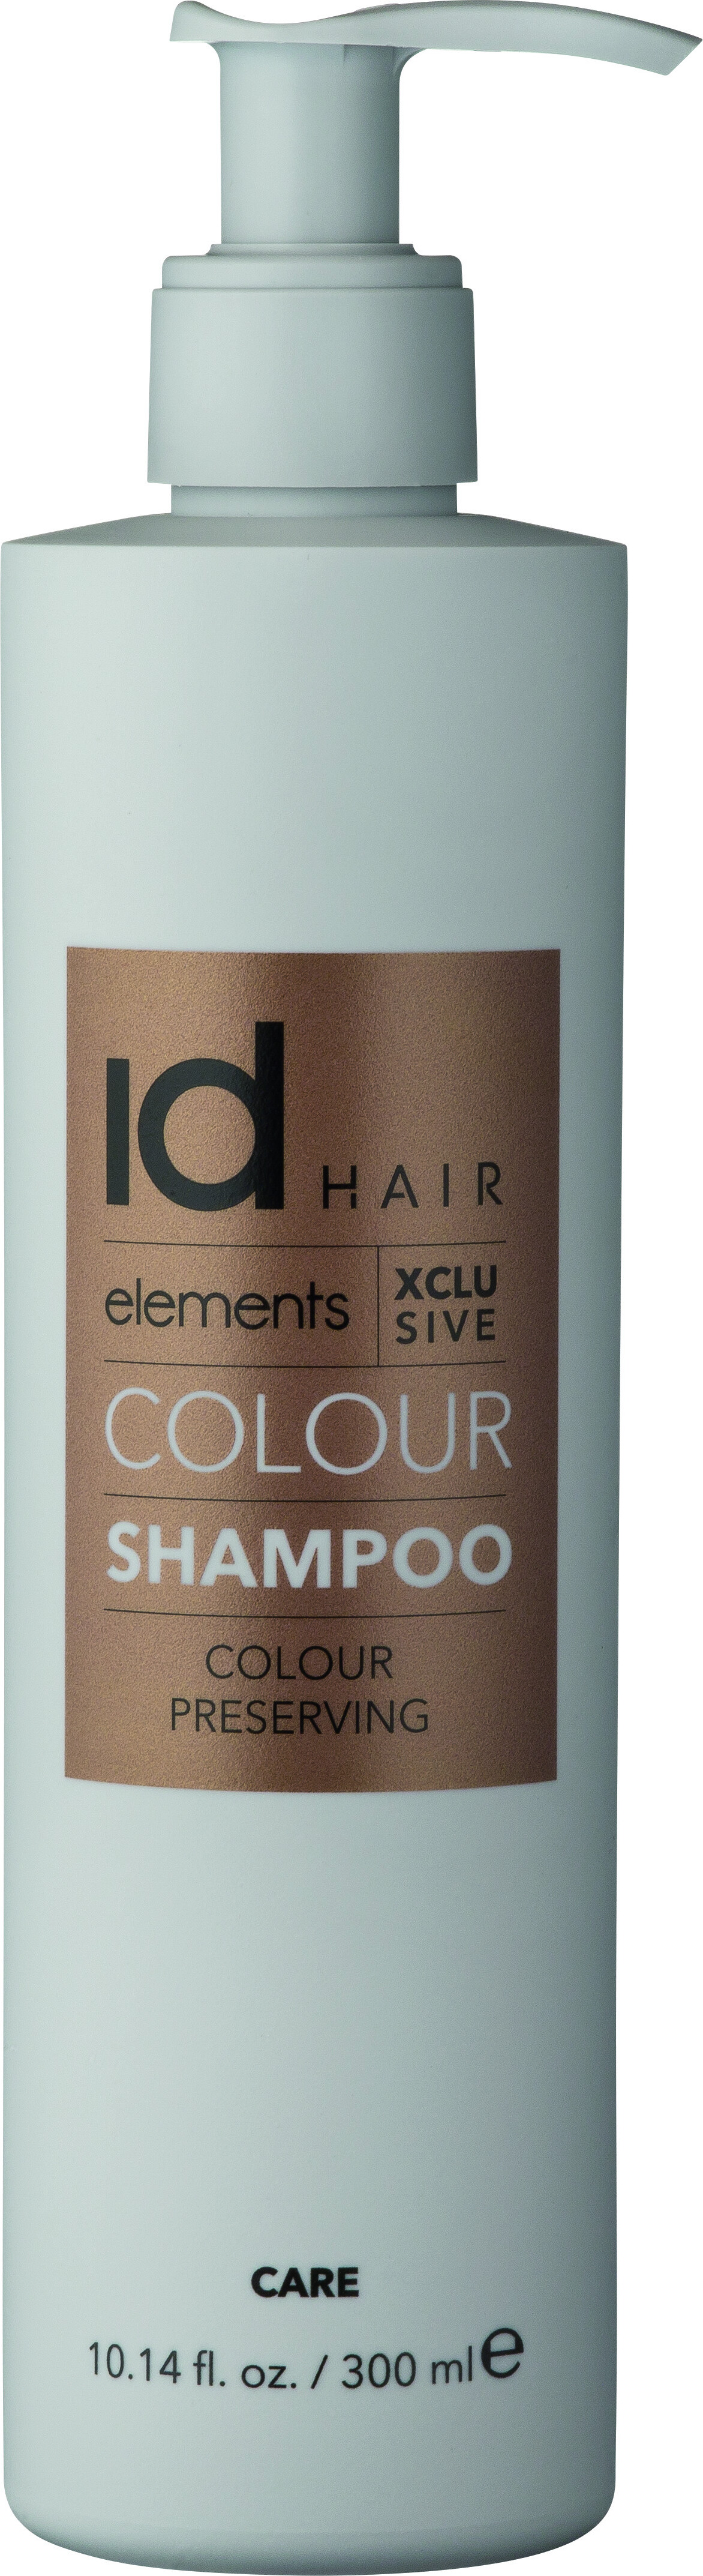 Billede af Id Hair - Elements Xclusive Colour Shampoo - 300 Ml hos Gucca.dk